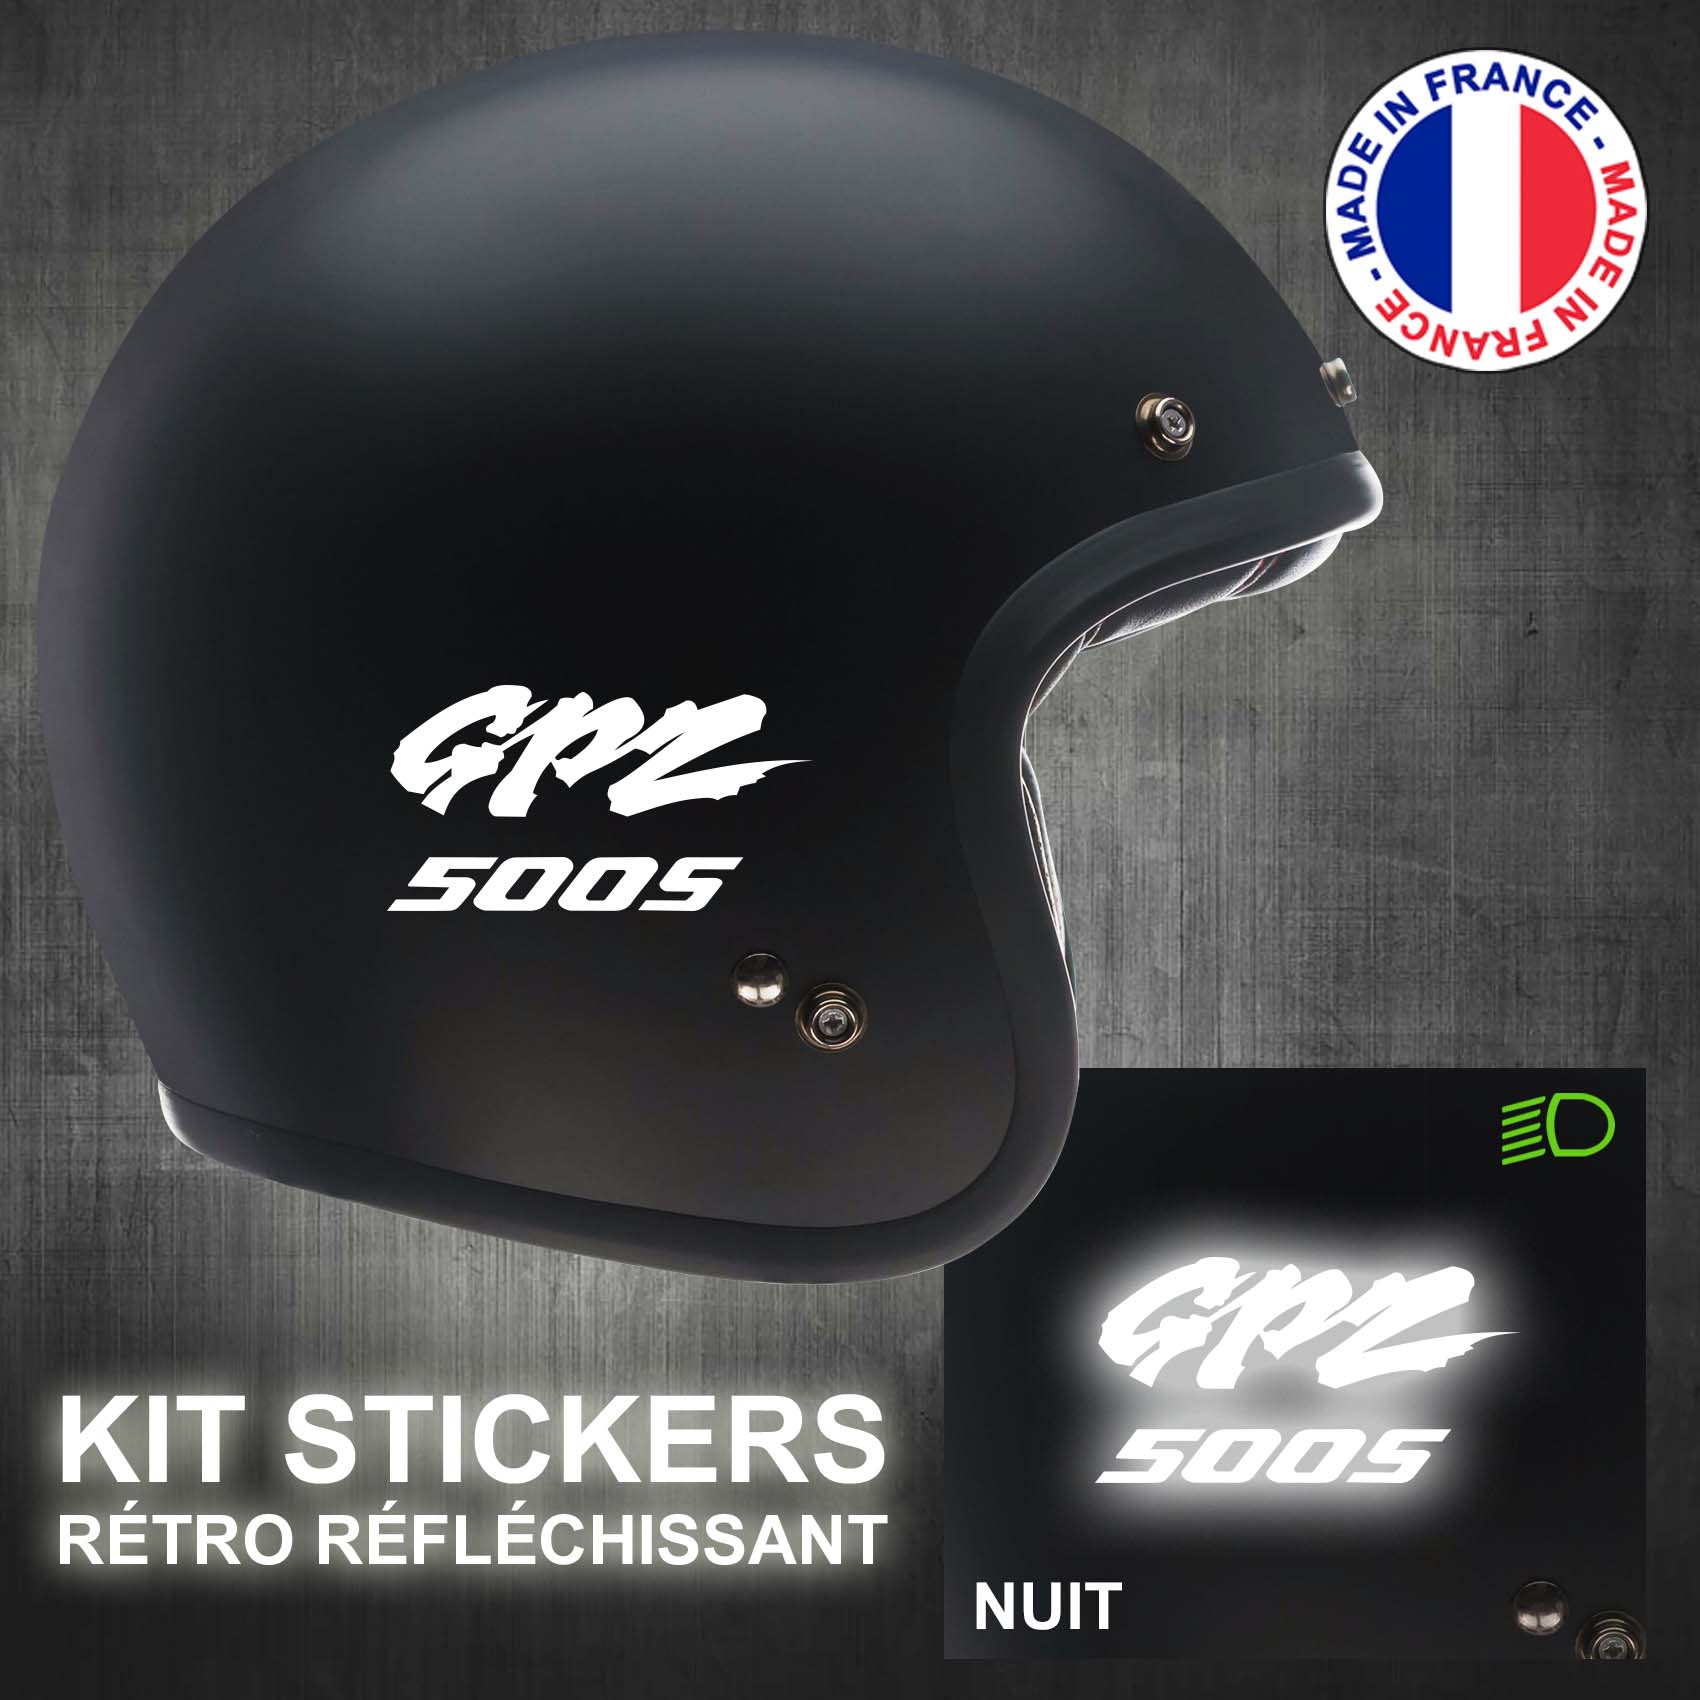 stickers-casque-moto-gpz-500s-kawasaki-ref2-retro-reflechissant-autocollant-noir-moto-velo-tuning-racing-route-sticker-casques-adhesif-nuit-securite-decals-personnalise-personnalisable-min